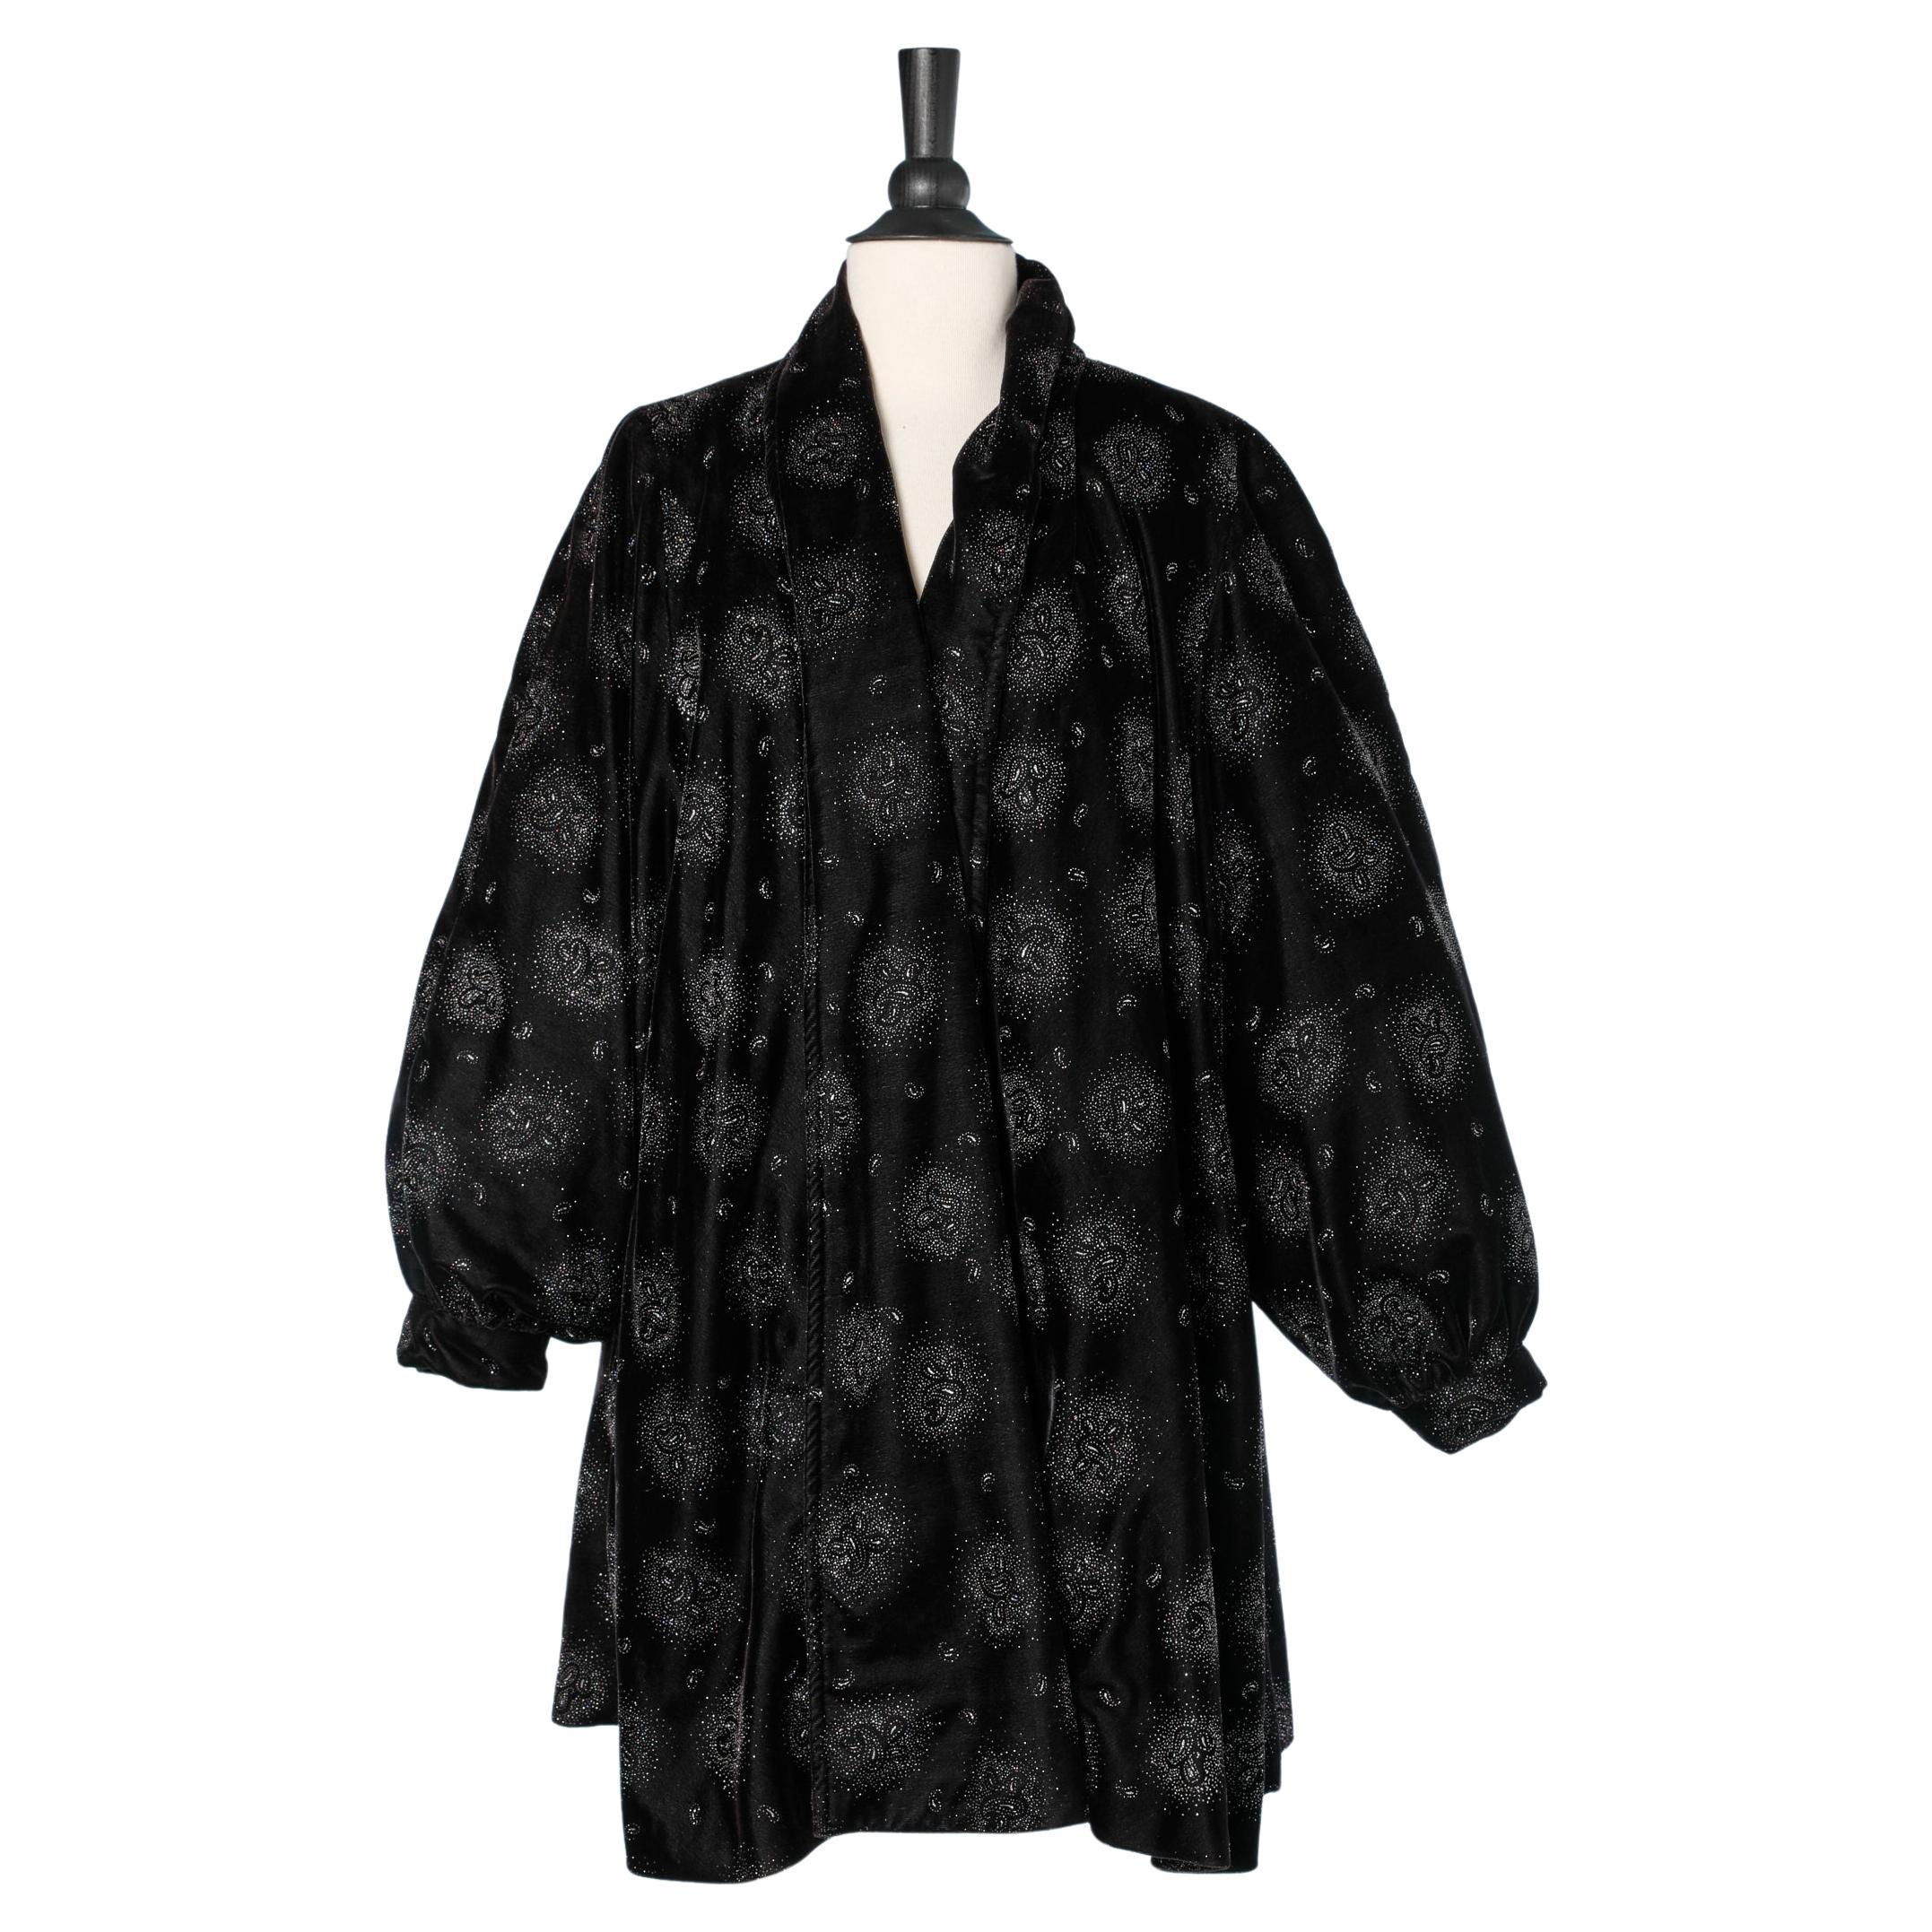 Black velvet evening coat with Paisley glitters pattern Estrosa  For Sale